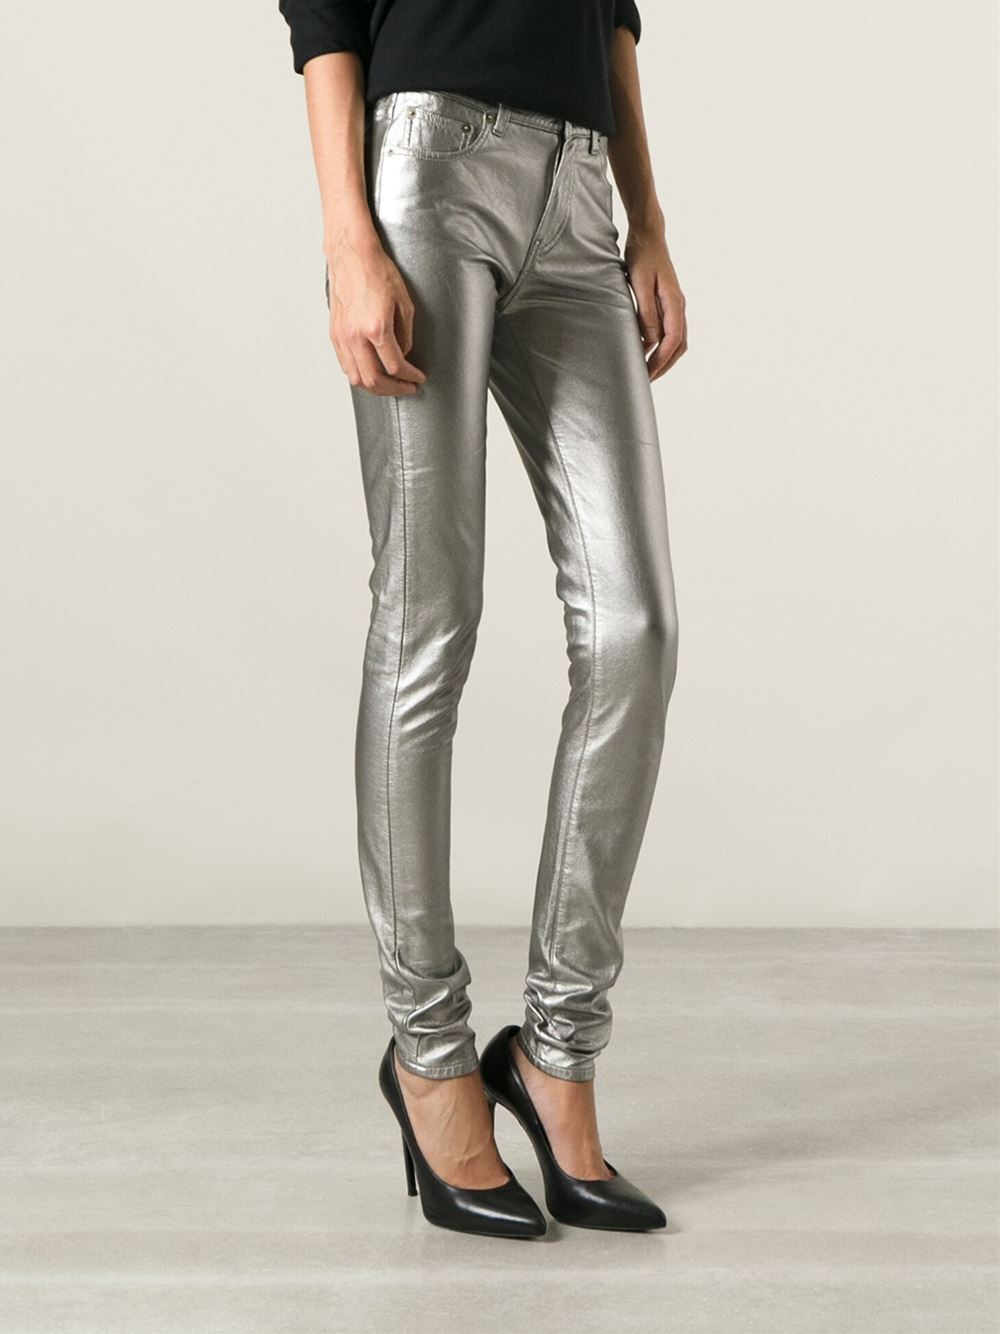 Lyst - Saint laurent Metallic Skinny Jeans in Metallic